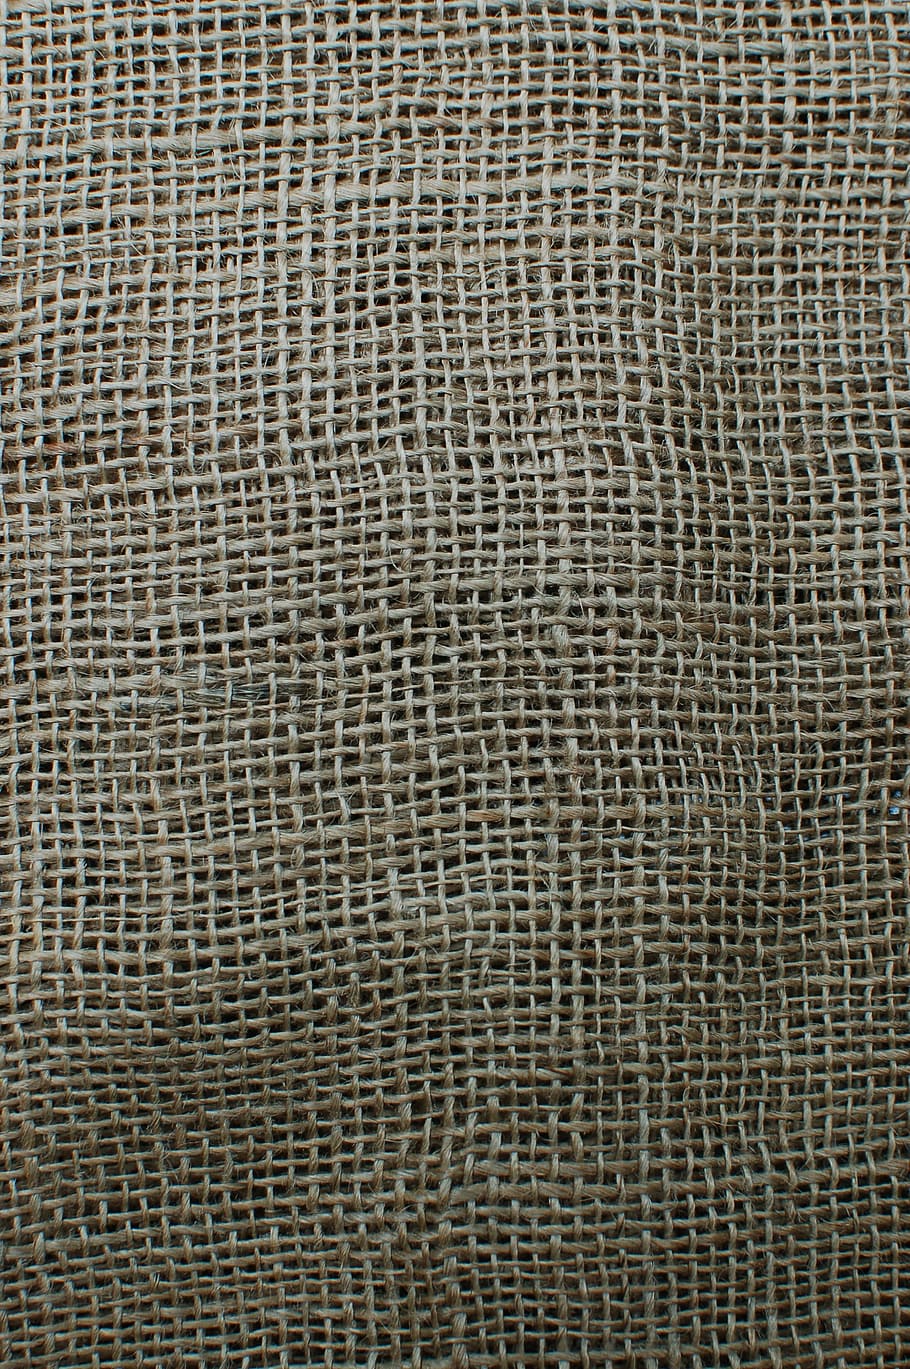 Premium Photo  Burlap wallpaper natural dark brown textile fiber  surface sackcloth texture background